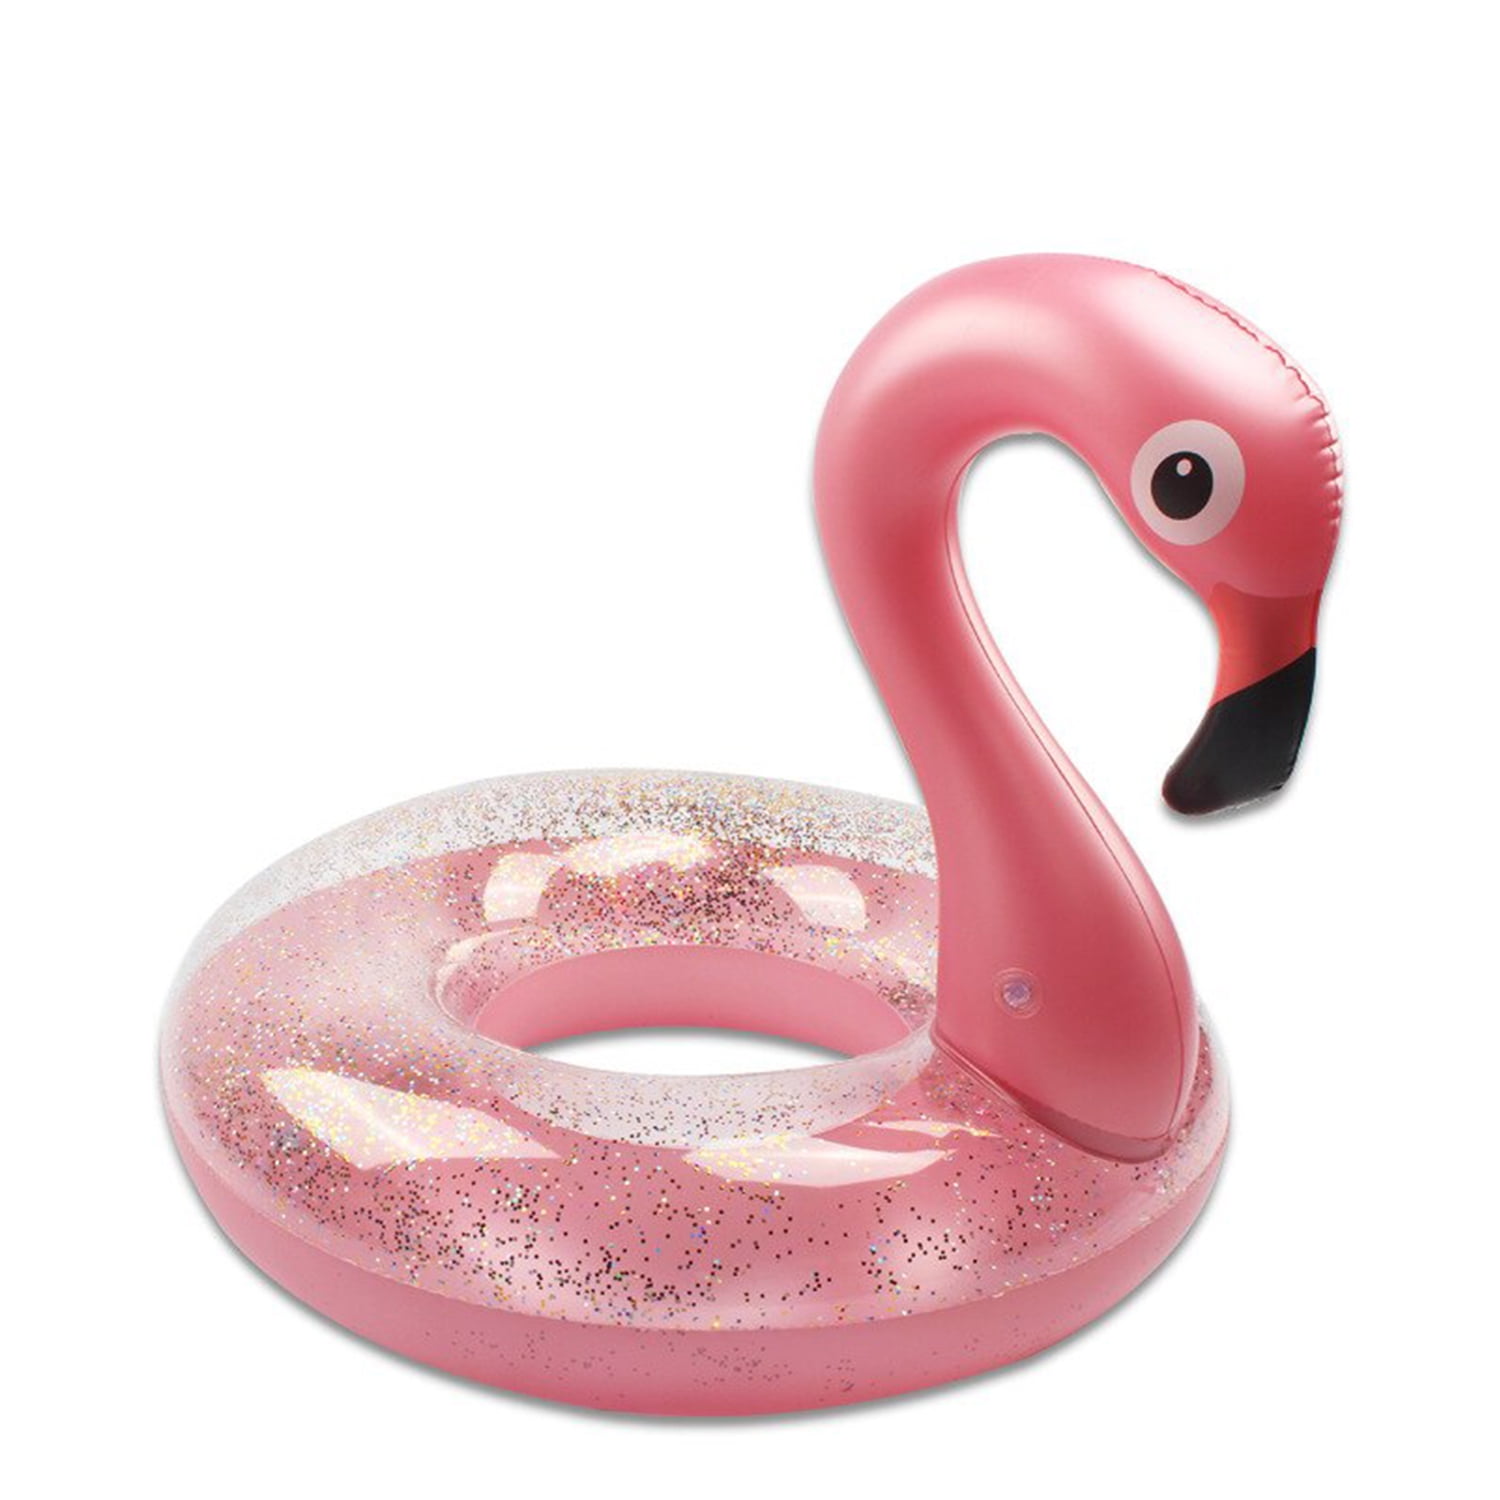 Intex Inflatable Ride On Pink Flamingo Pool Lounge Float Swimming Fun Kids Toy 